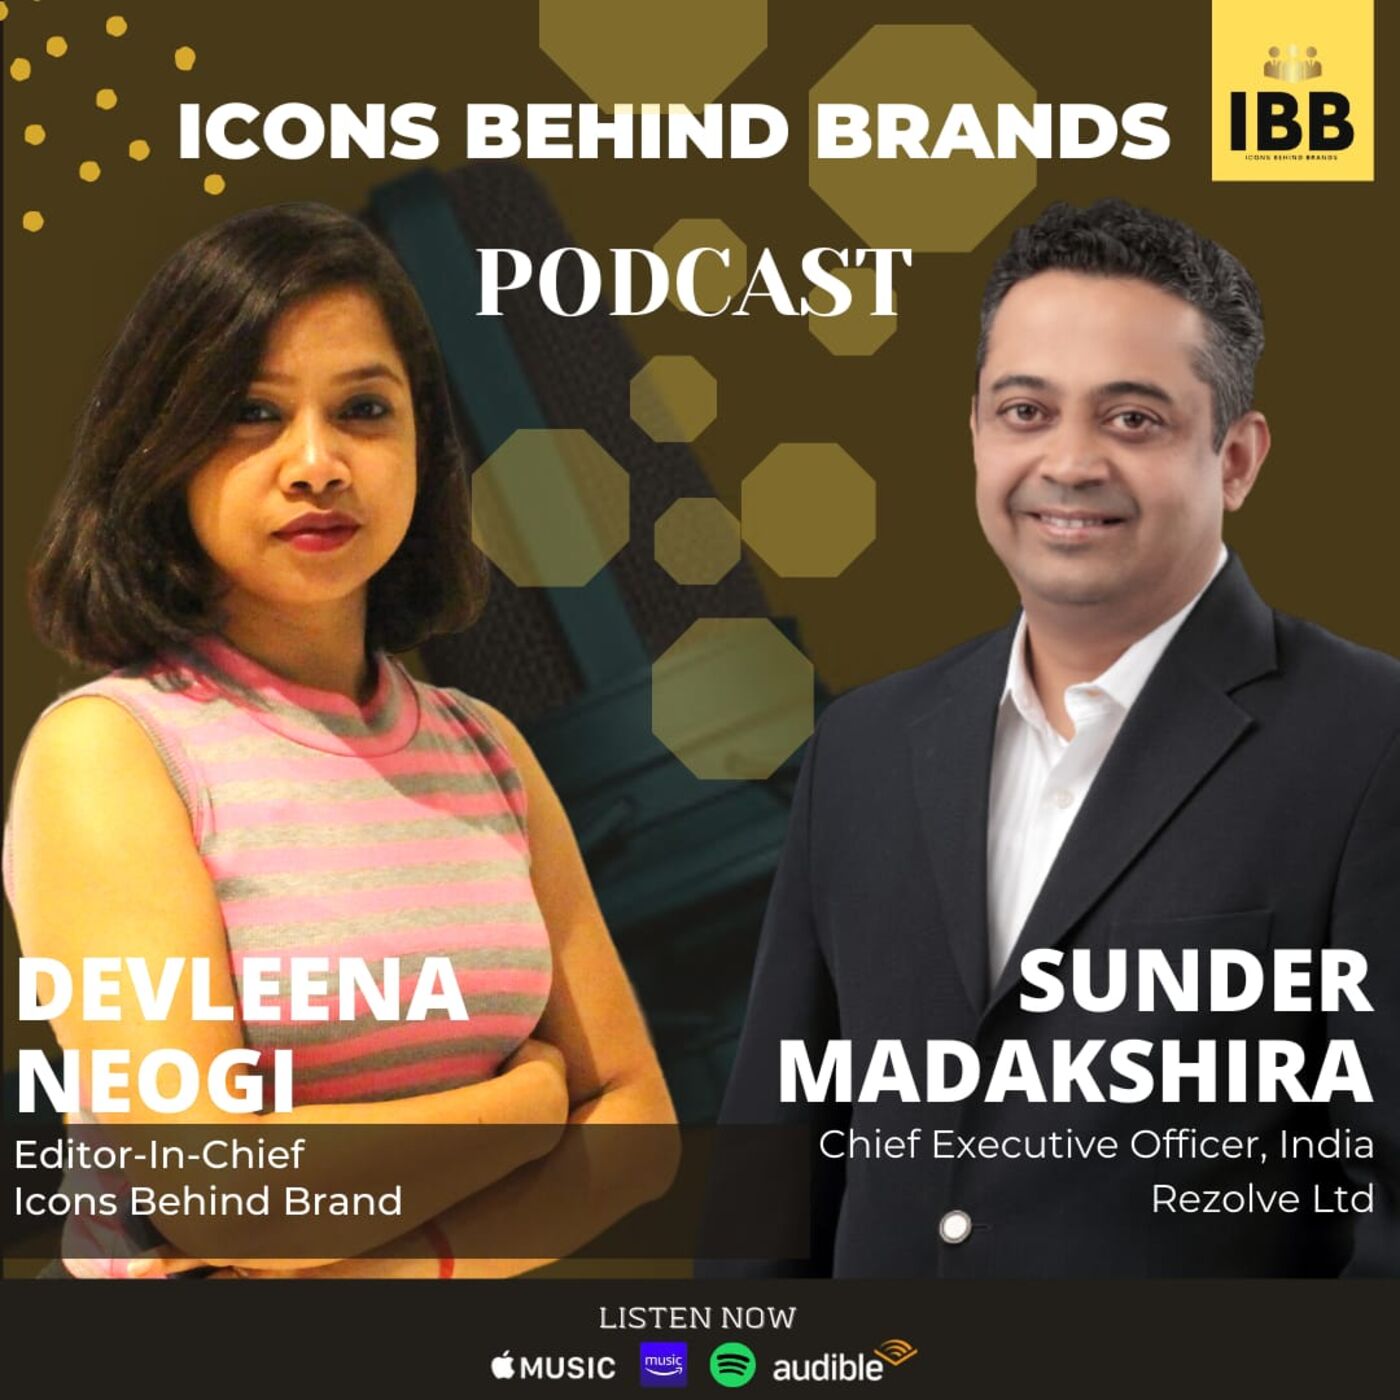 Top Marketing Tips from the CEO| Mr. Sunder Madakshira| IBB